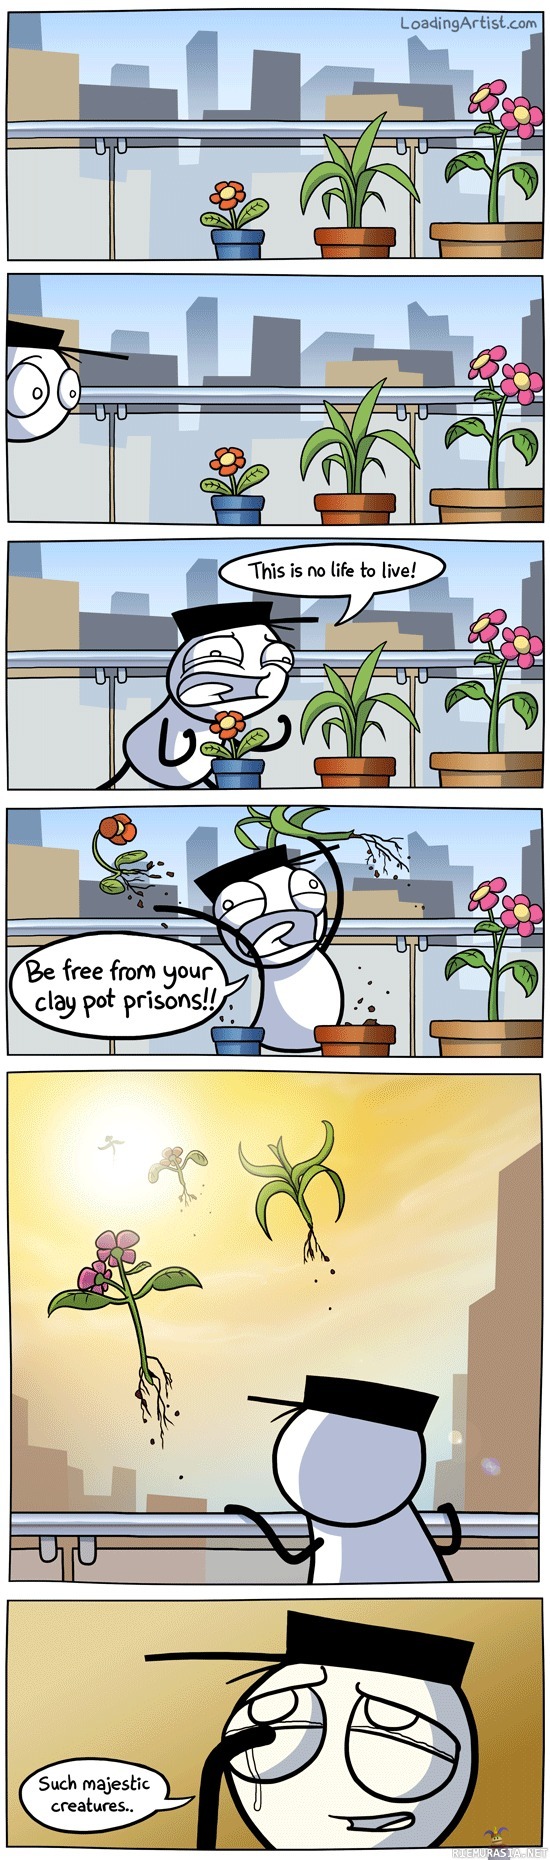 Plants deserve better